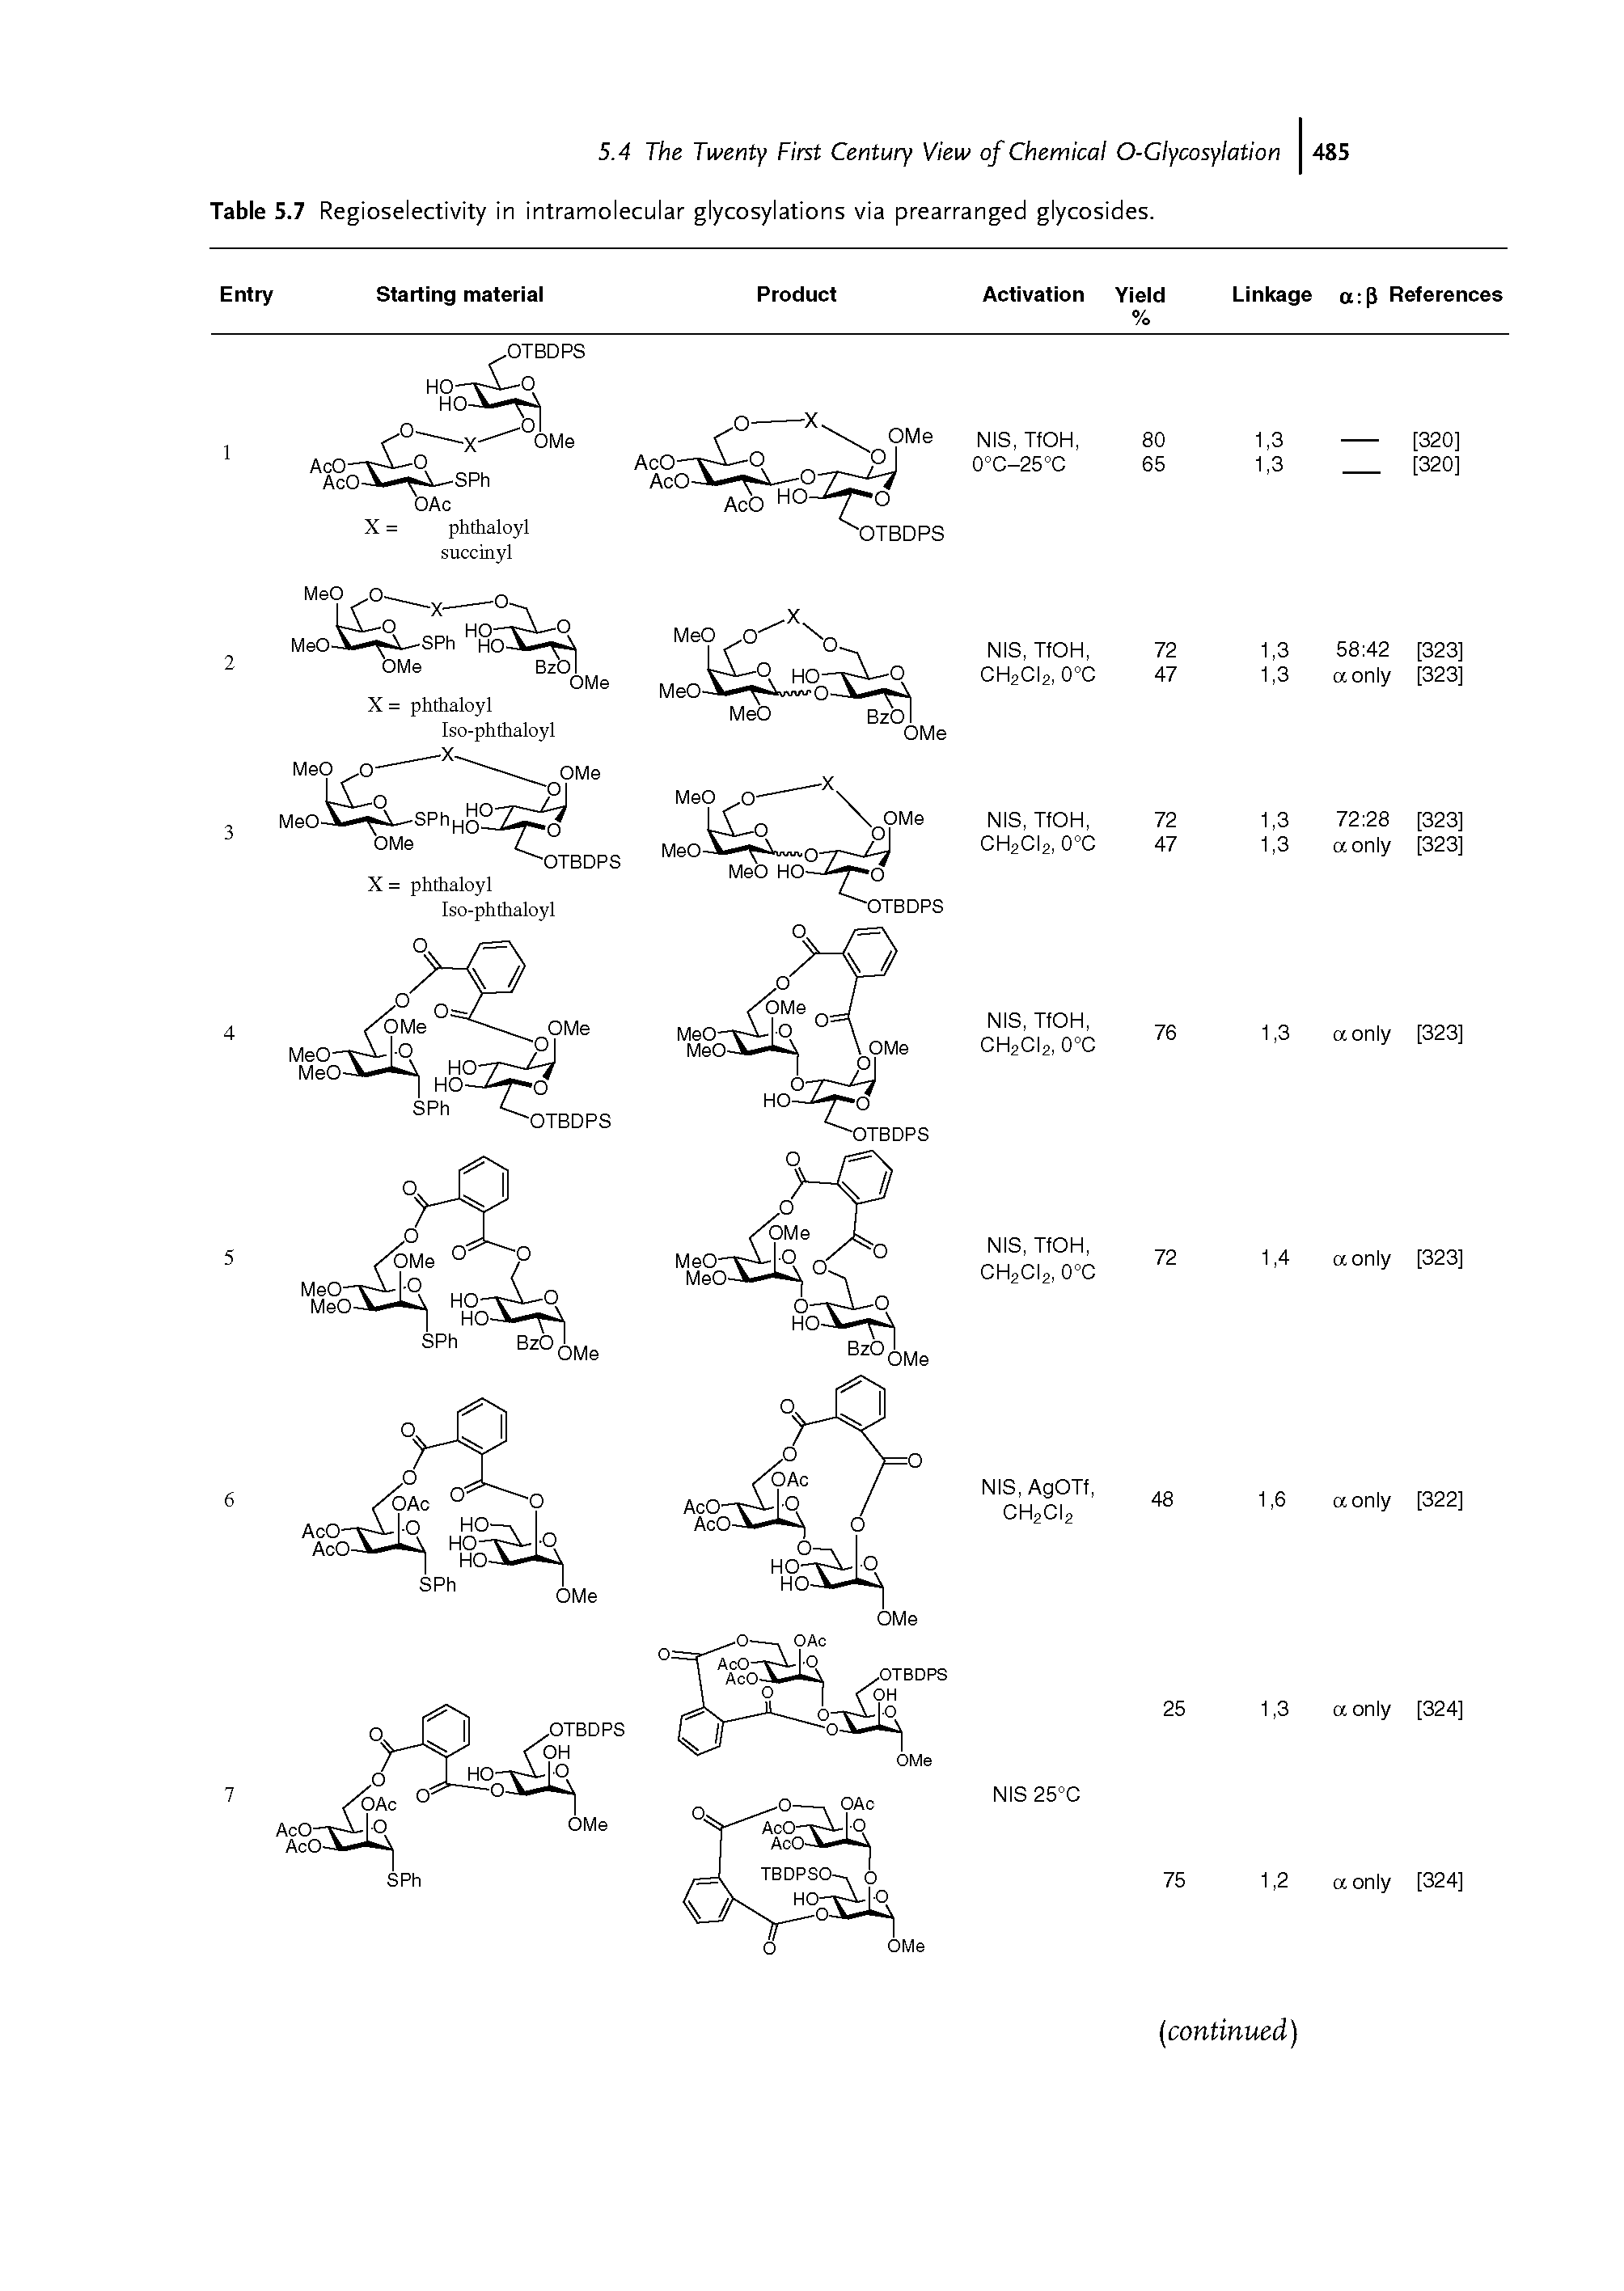 Table 5.7 Regioselectivity in intramolecular glycosylations via prearranged glycosides.